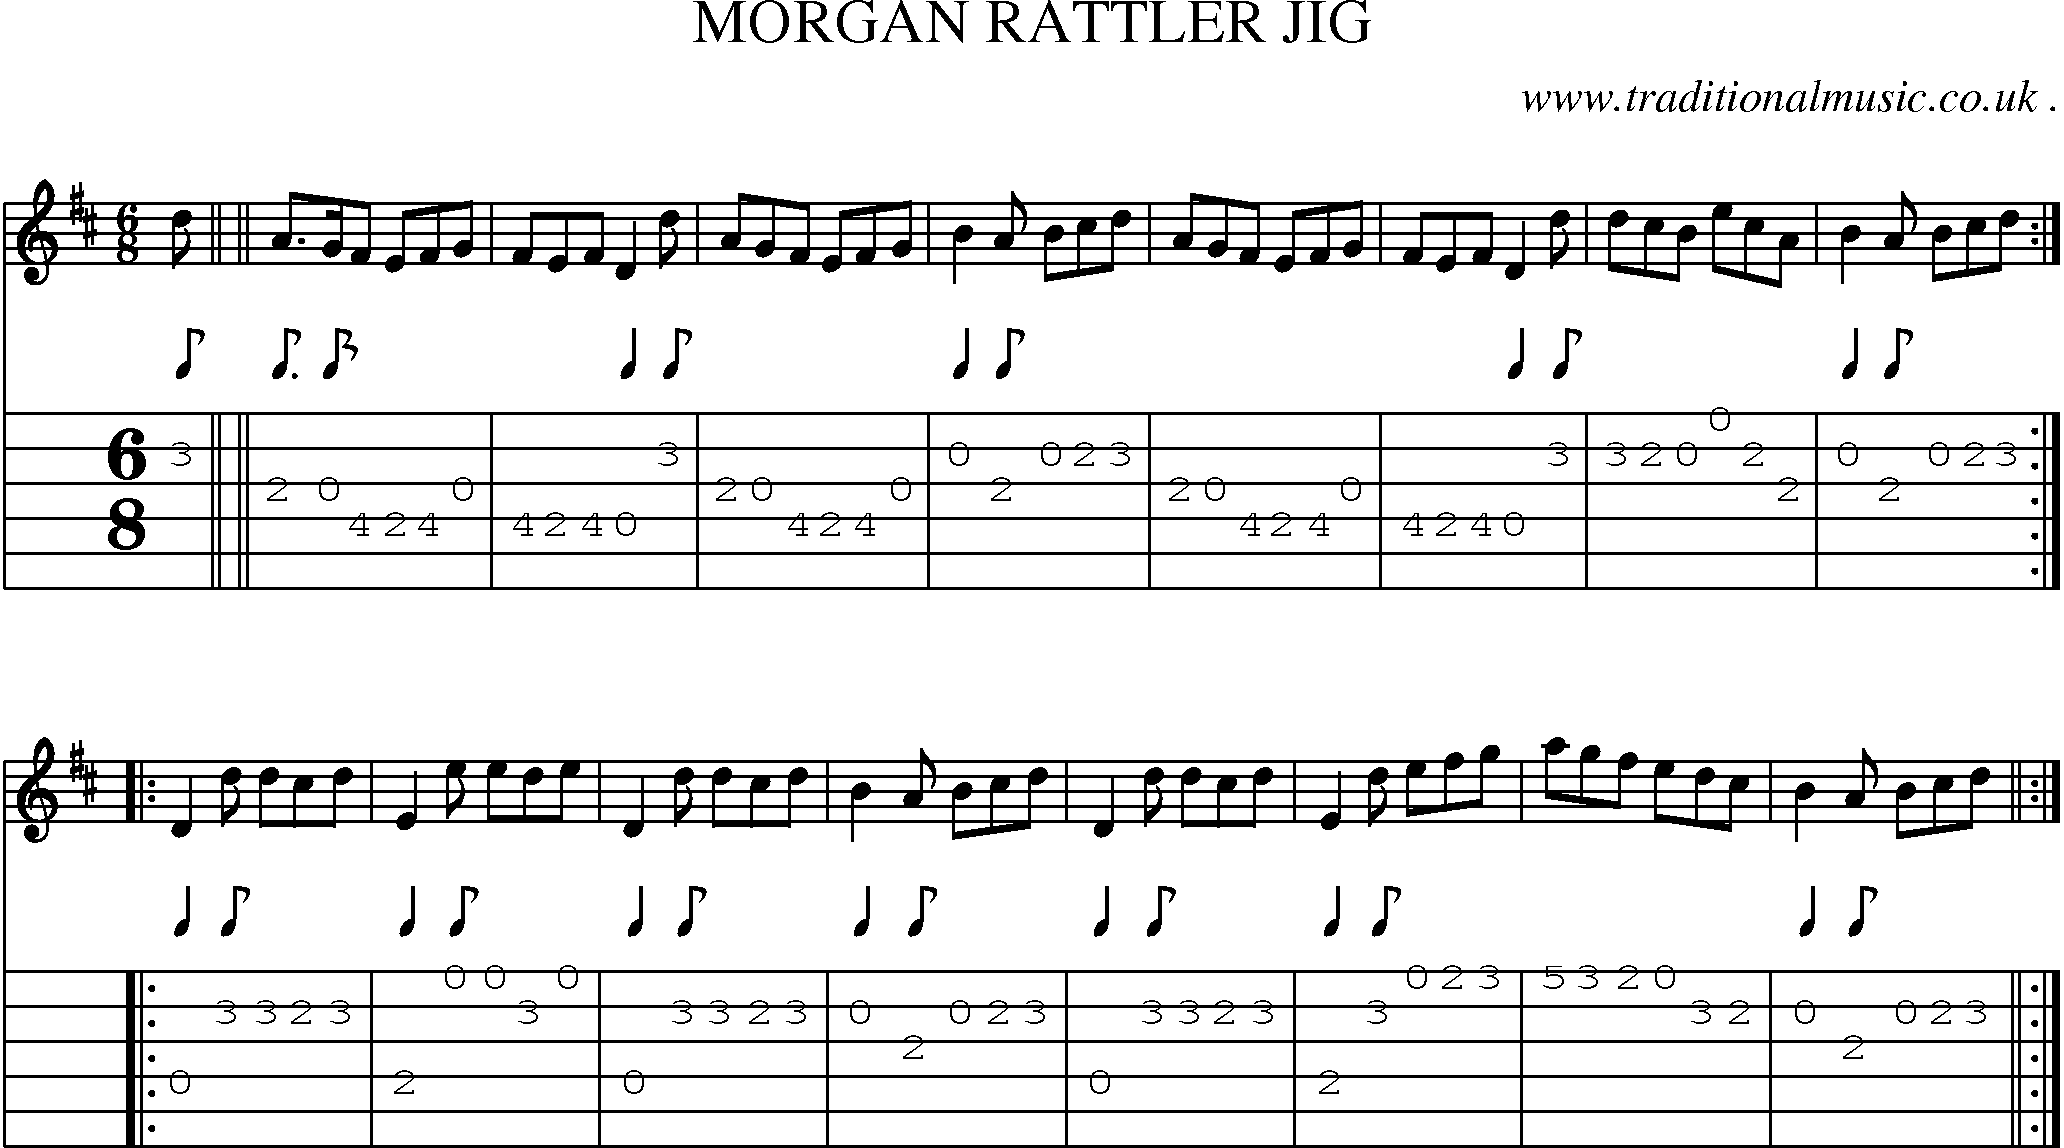 Sheet-Music and Guitar Tabs for Morgan Rattler Jig